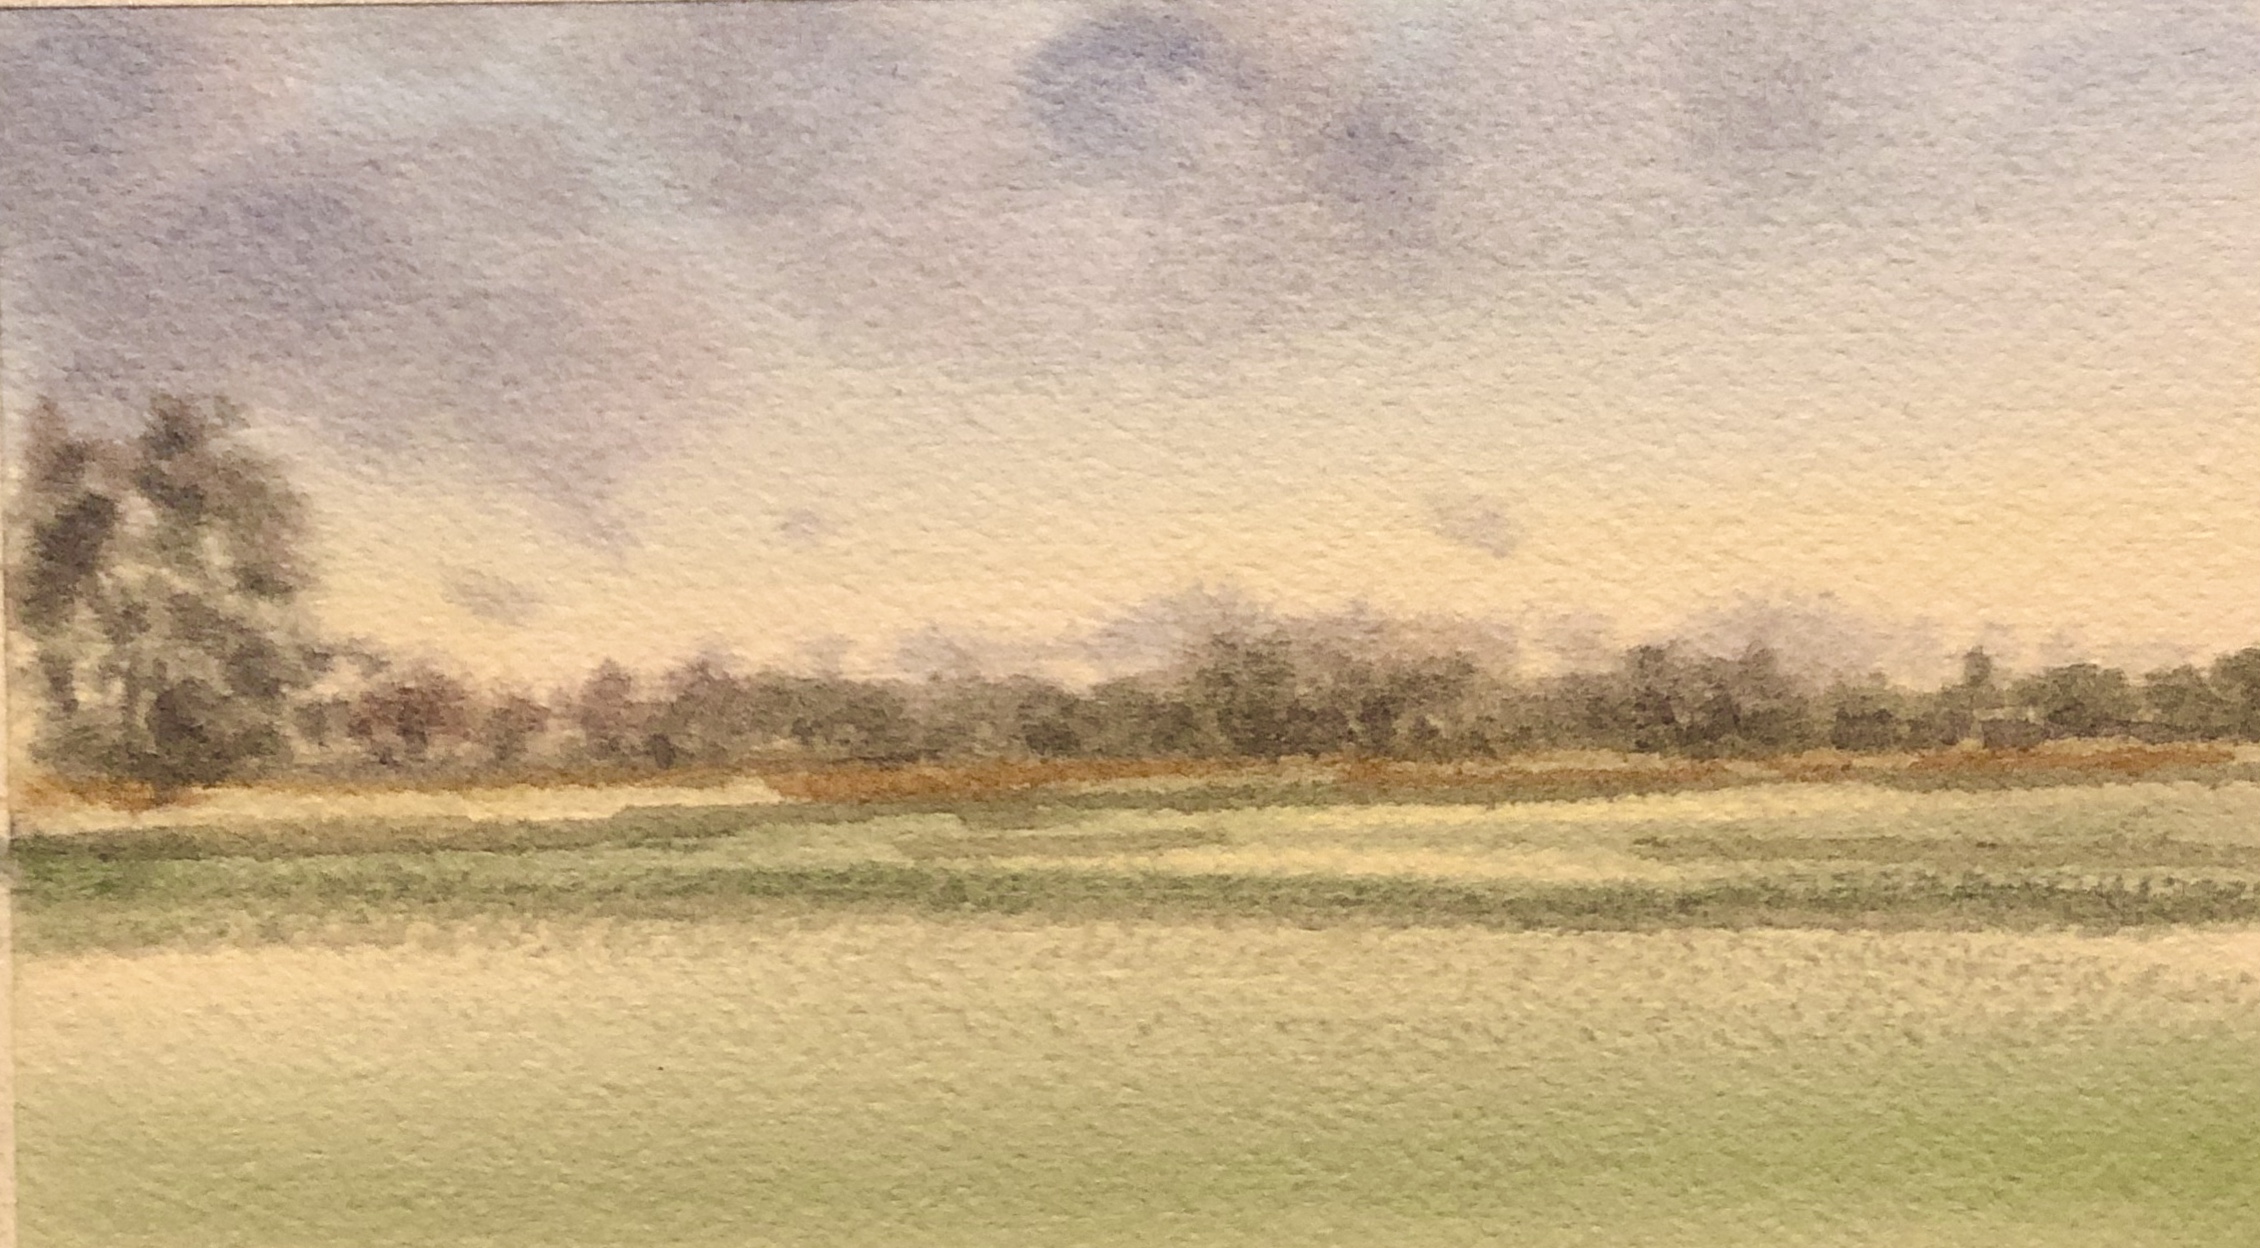 Champaign Prairie
Watercolor 
7.5" X 4.5"
$100.